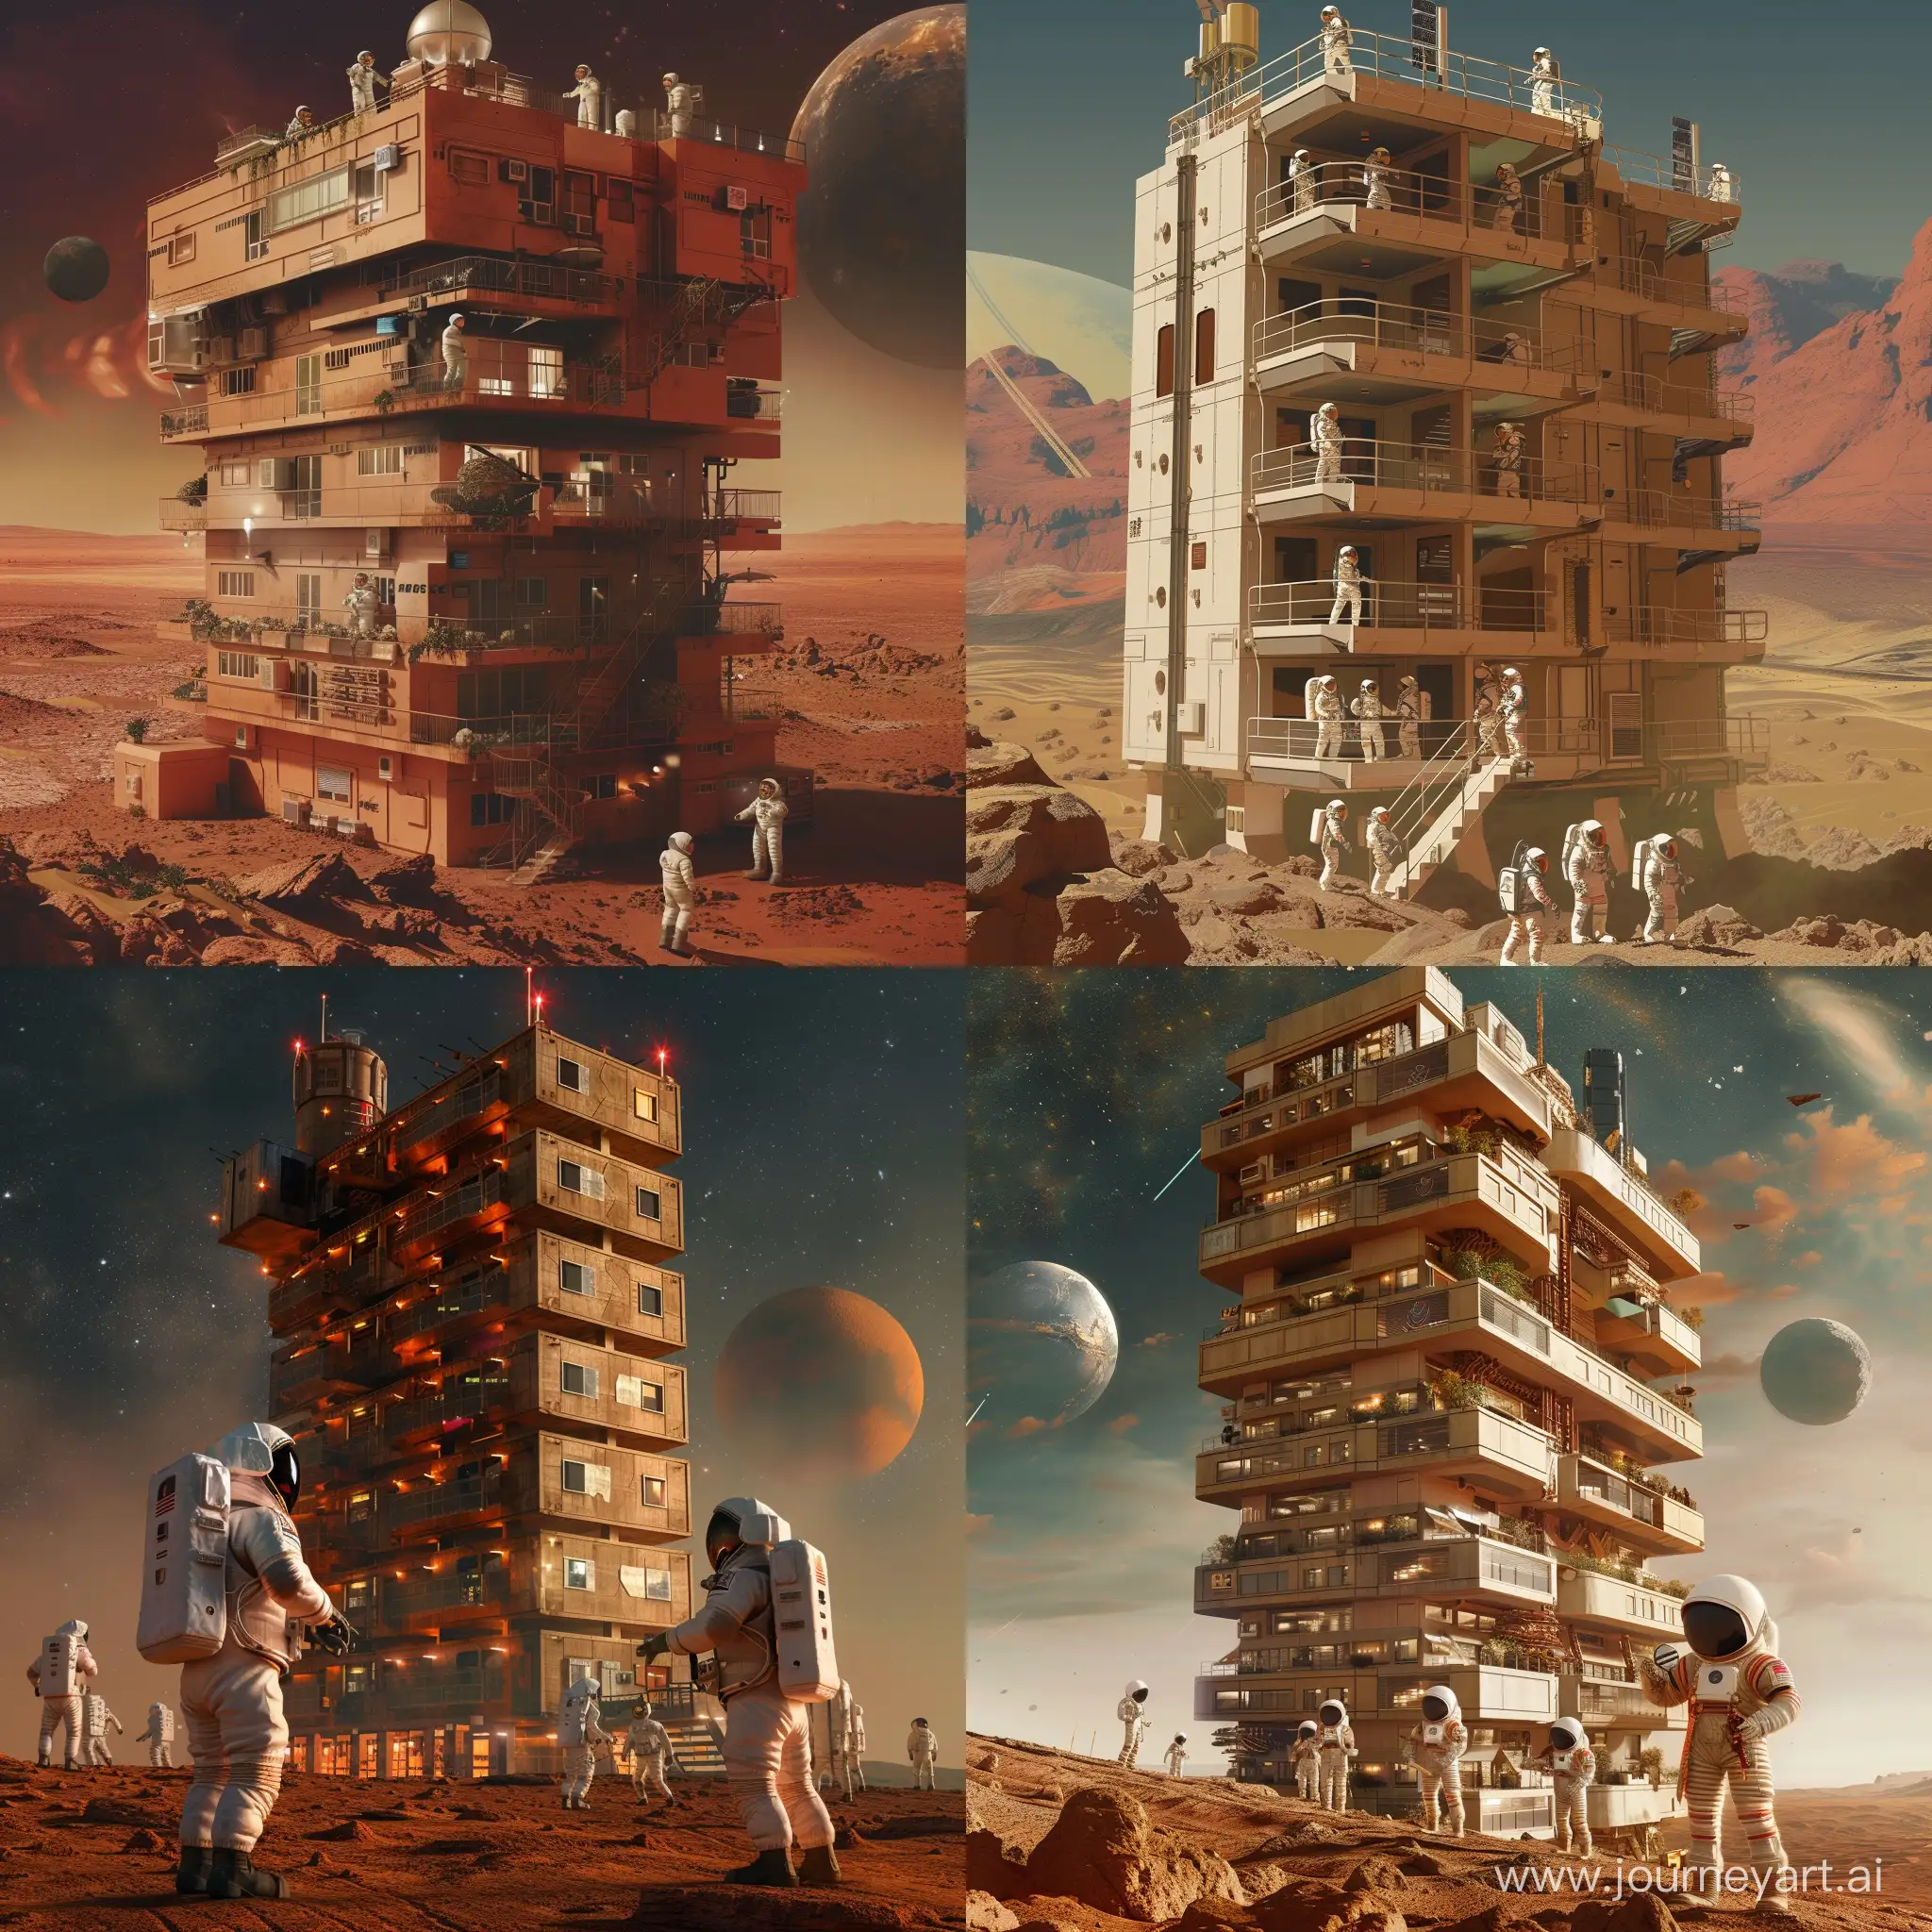 Mars-Space-Colony-with-Astronauts-in-Futuristic-SciFi-Setting